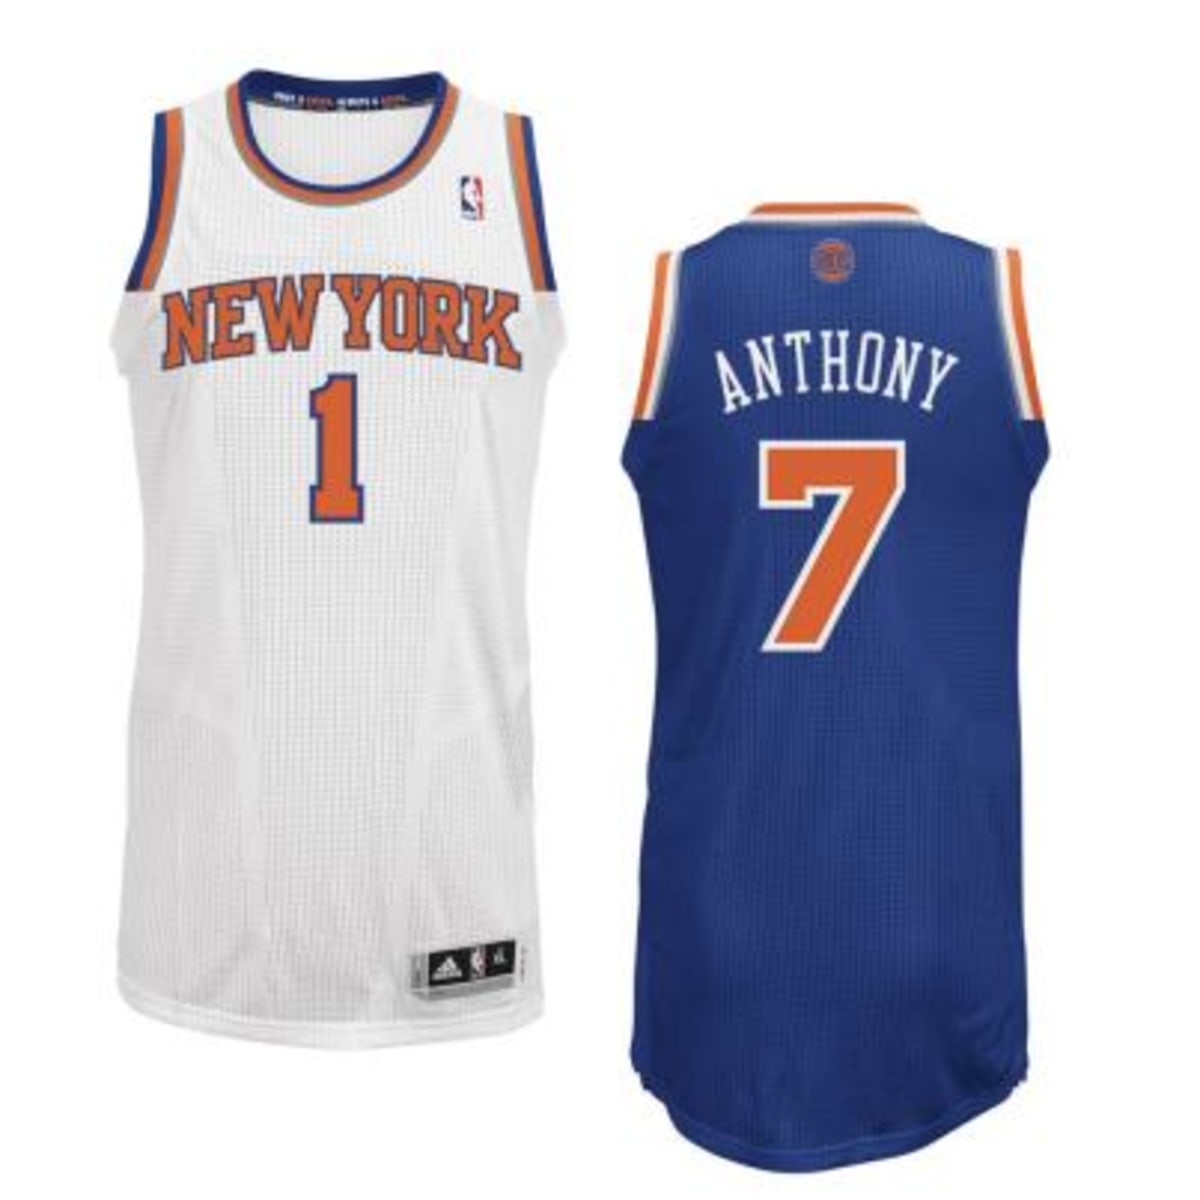 New York Knicks Jerseys, Knicks Kit, New York Knicks Uniforms